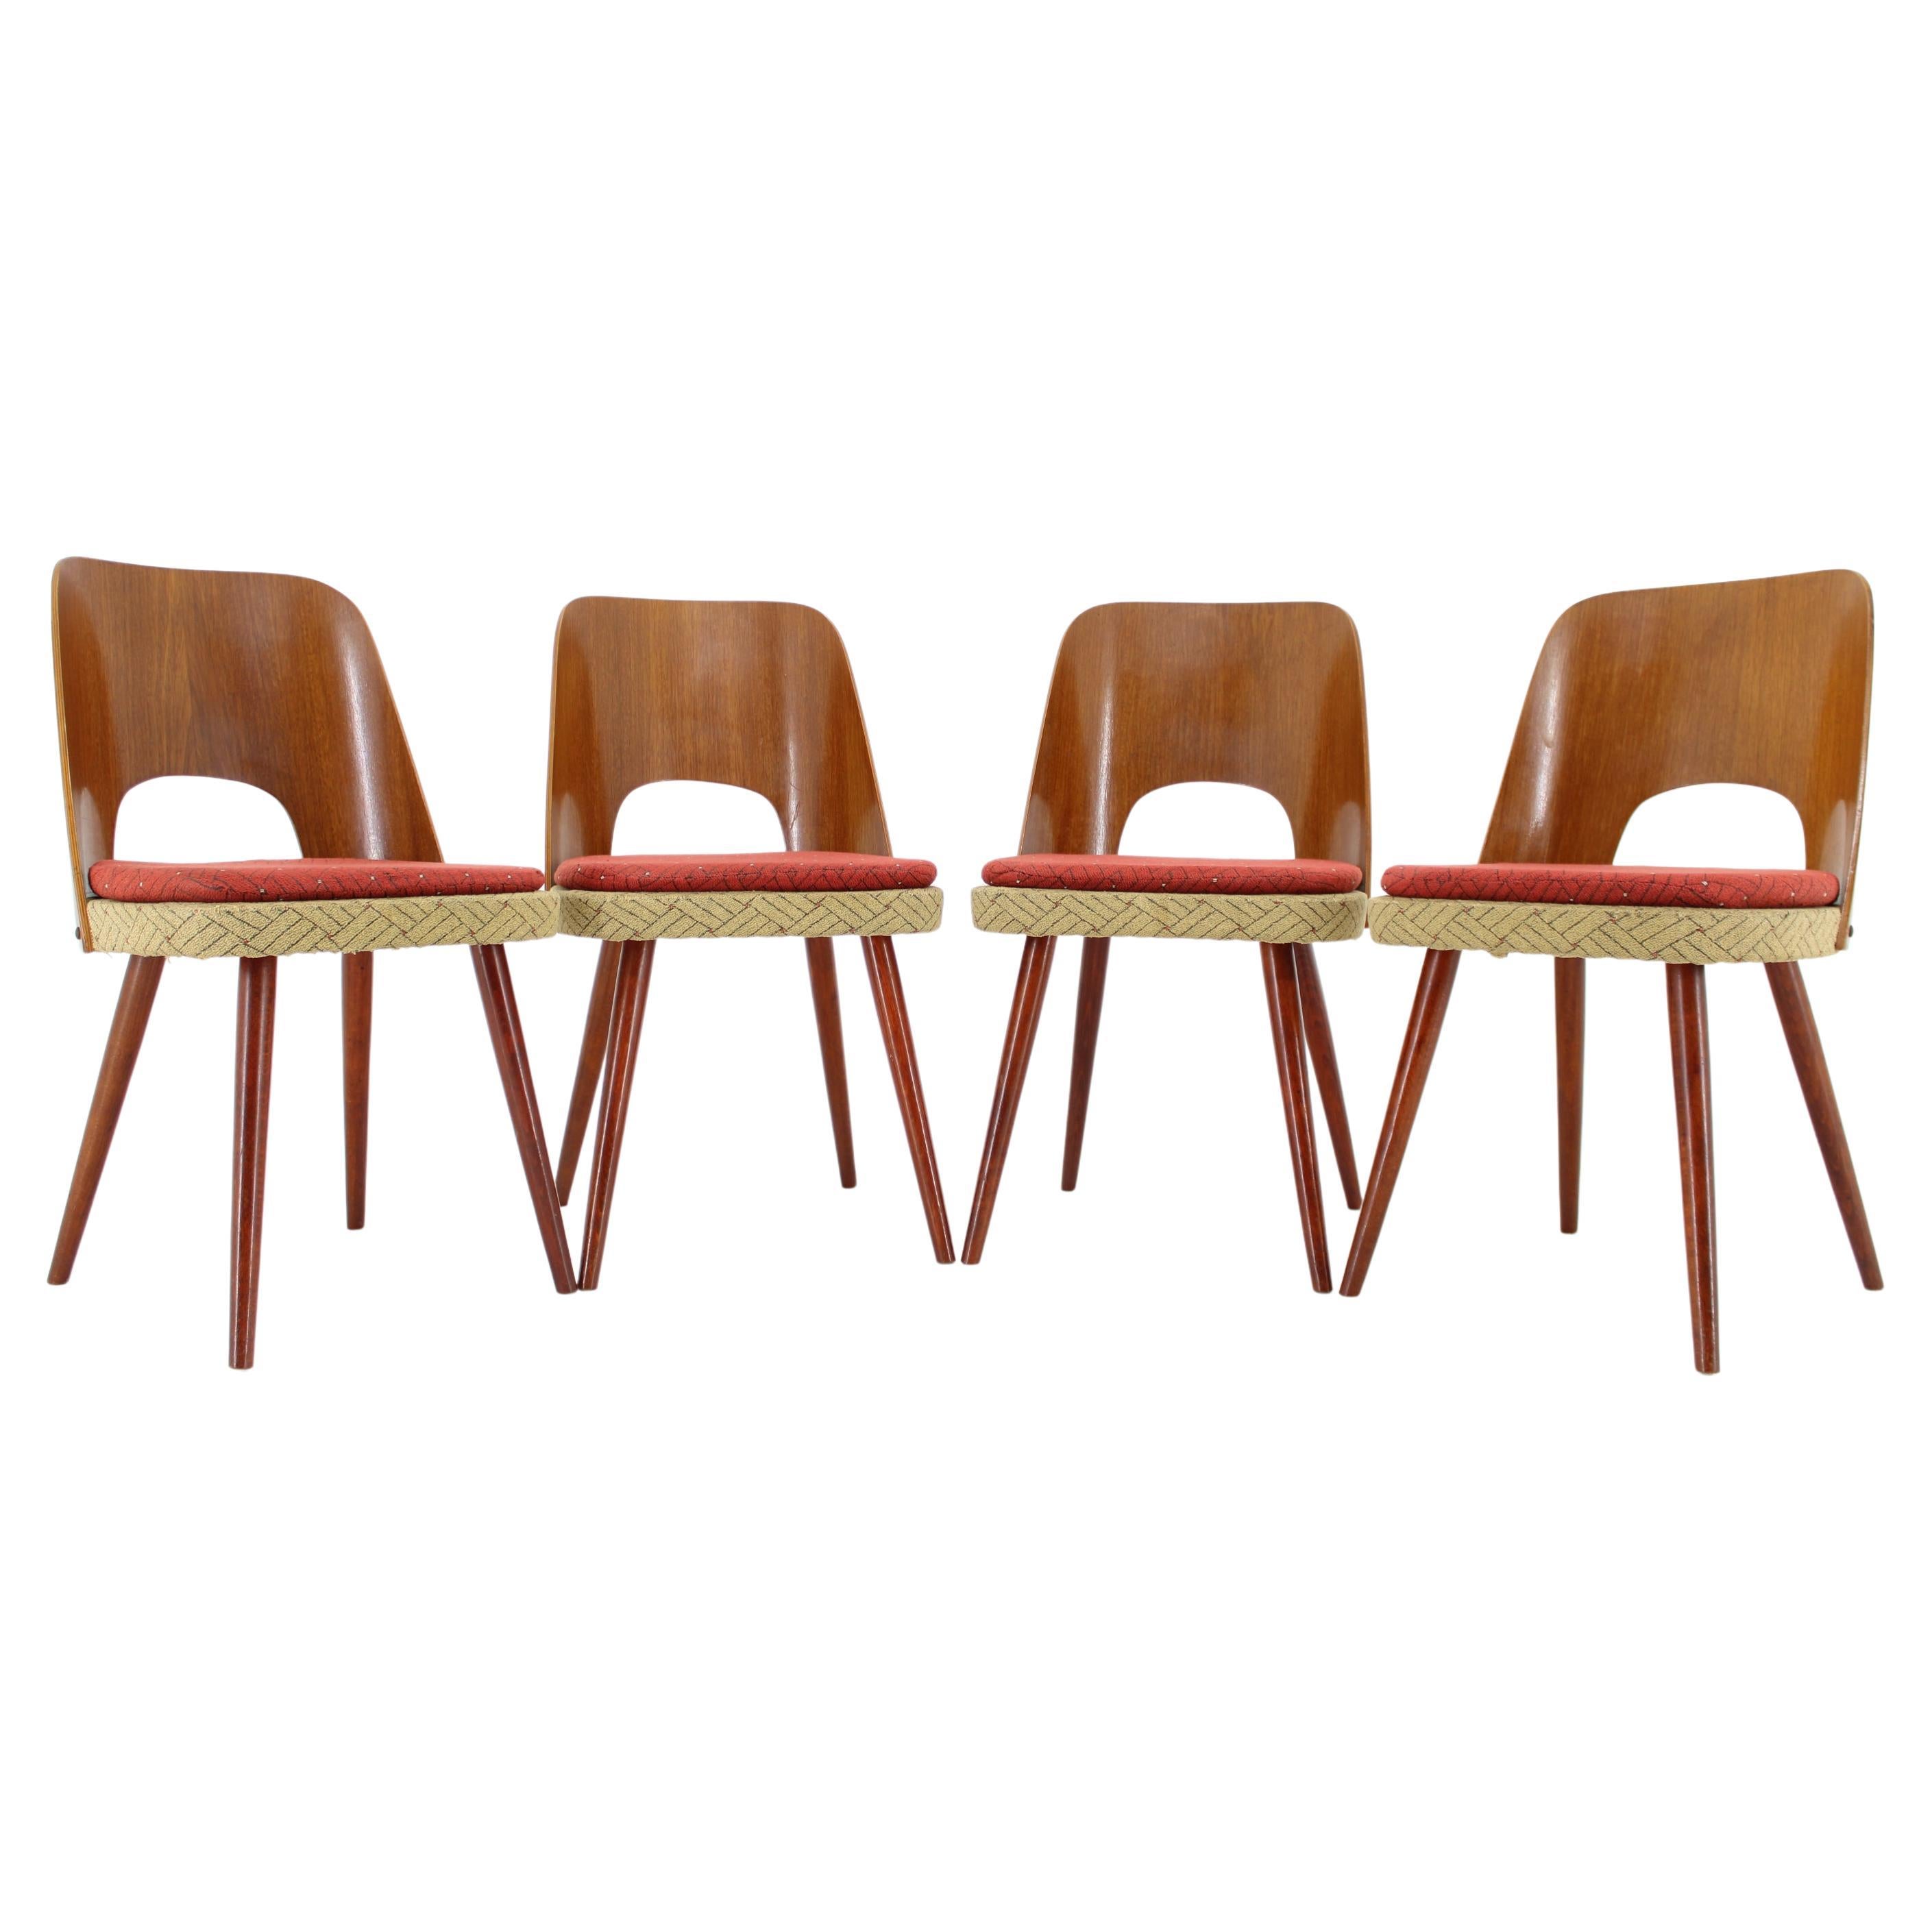 1960s Oswald Haerdtl, Set of 4 Dining Chairs by TON, Czechoslovakia